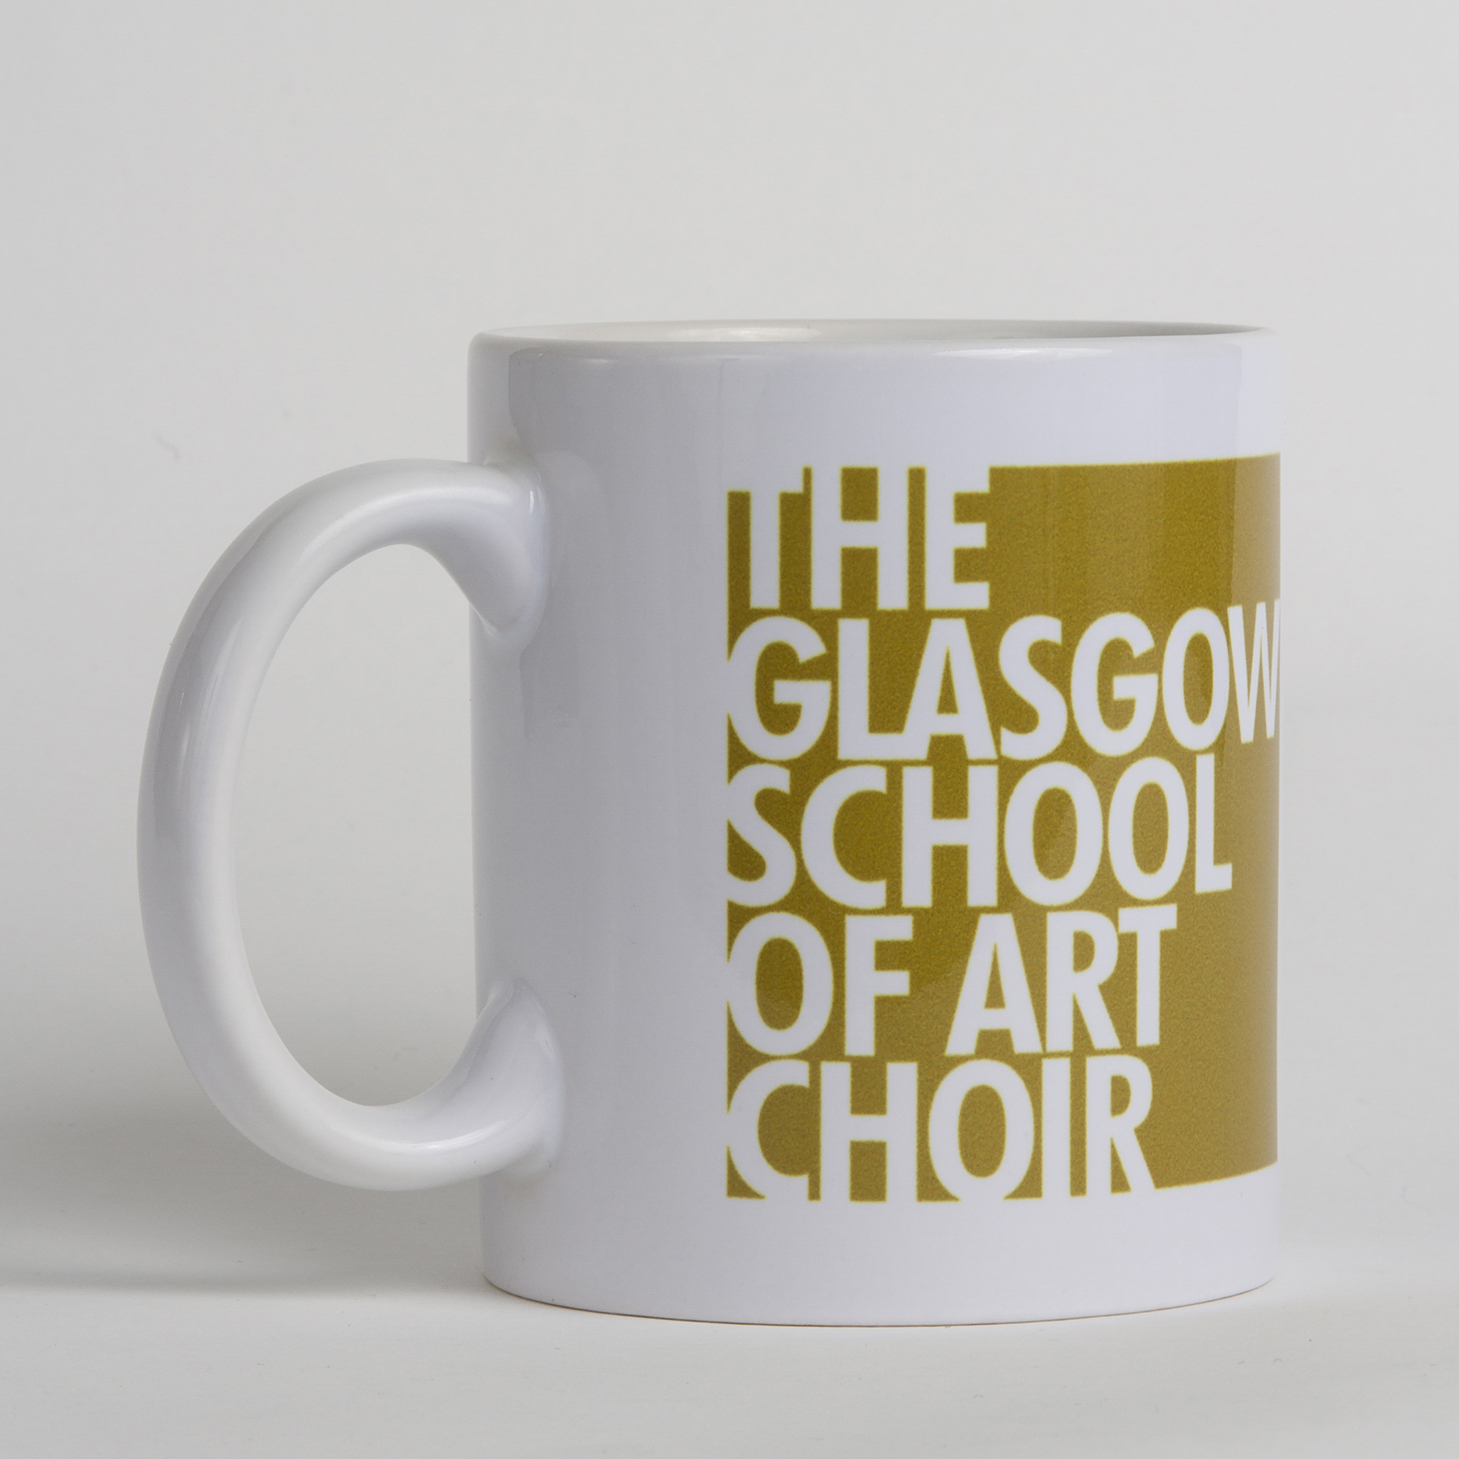 The Glasgow School of Art Choir souvenir mug  The Glasgow 